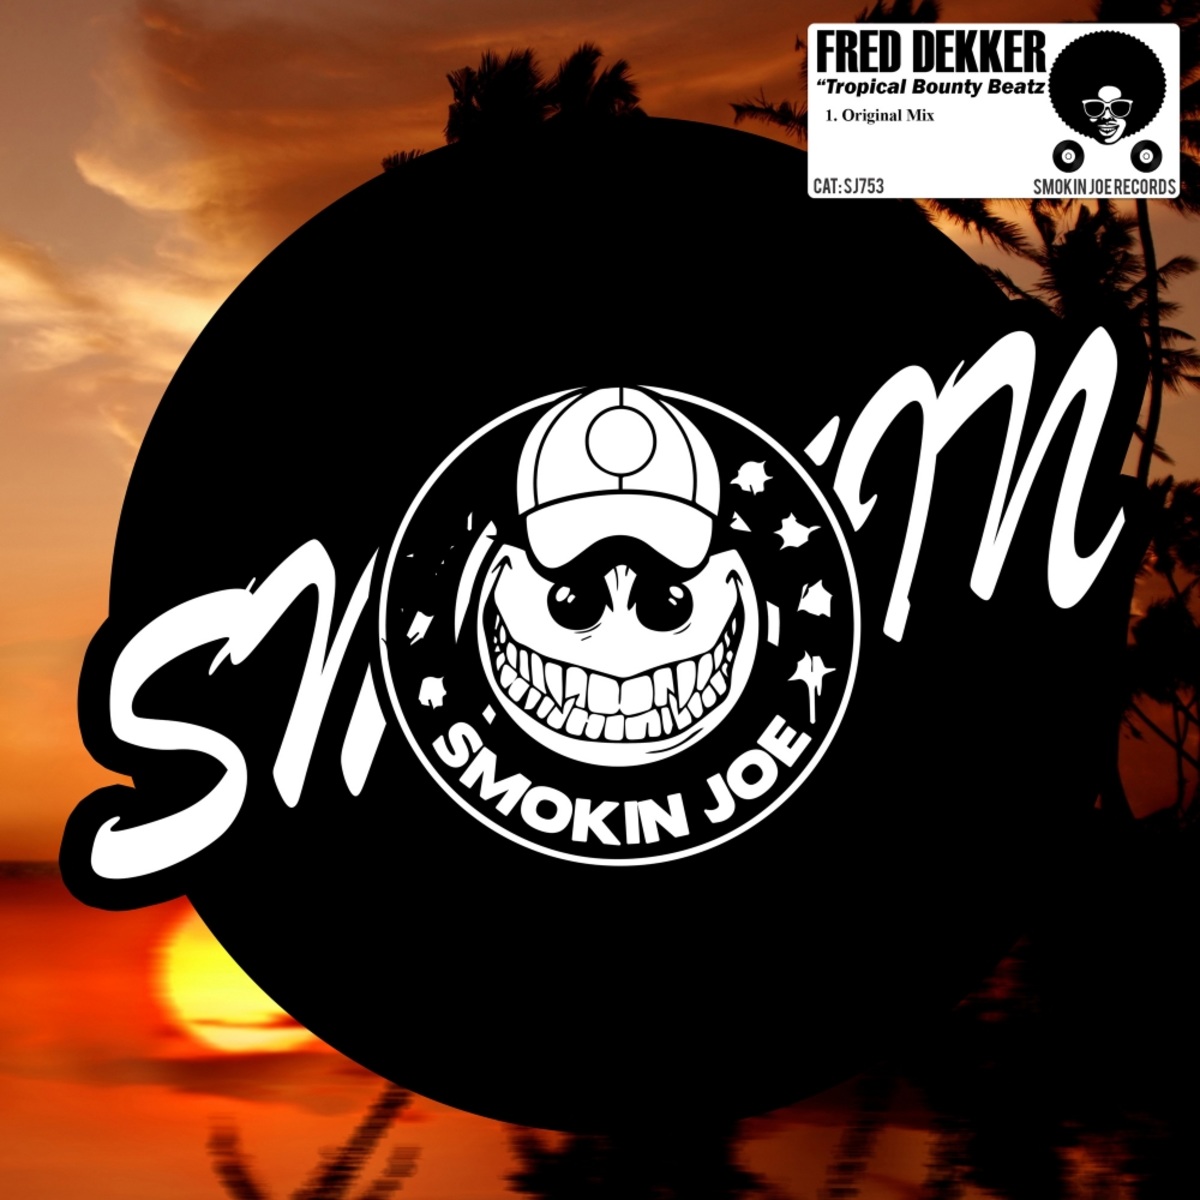 Fred Dekker - Tropical Bounty Beatz / Smokin Joe Records